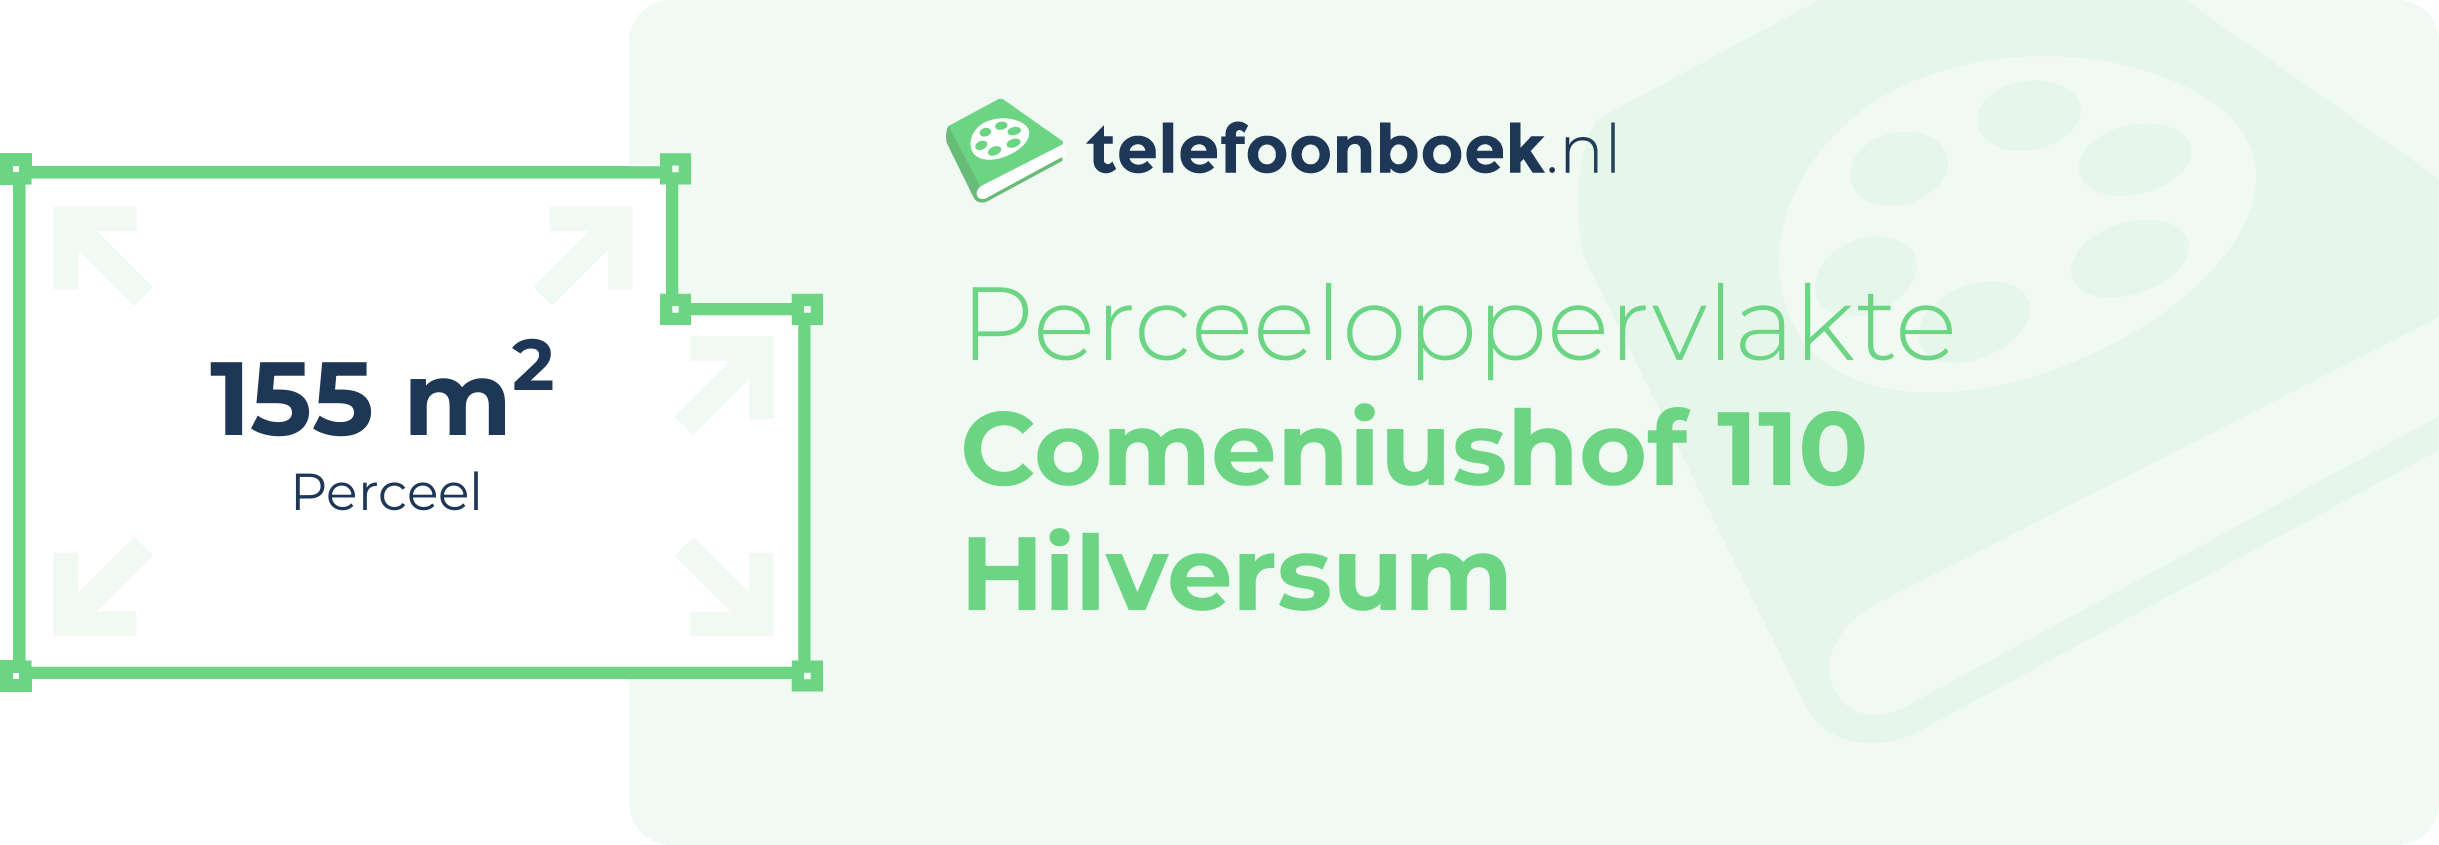 Perceeloppervlakte Comeniushof 110 Hilversum